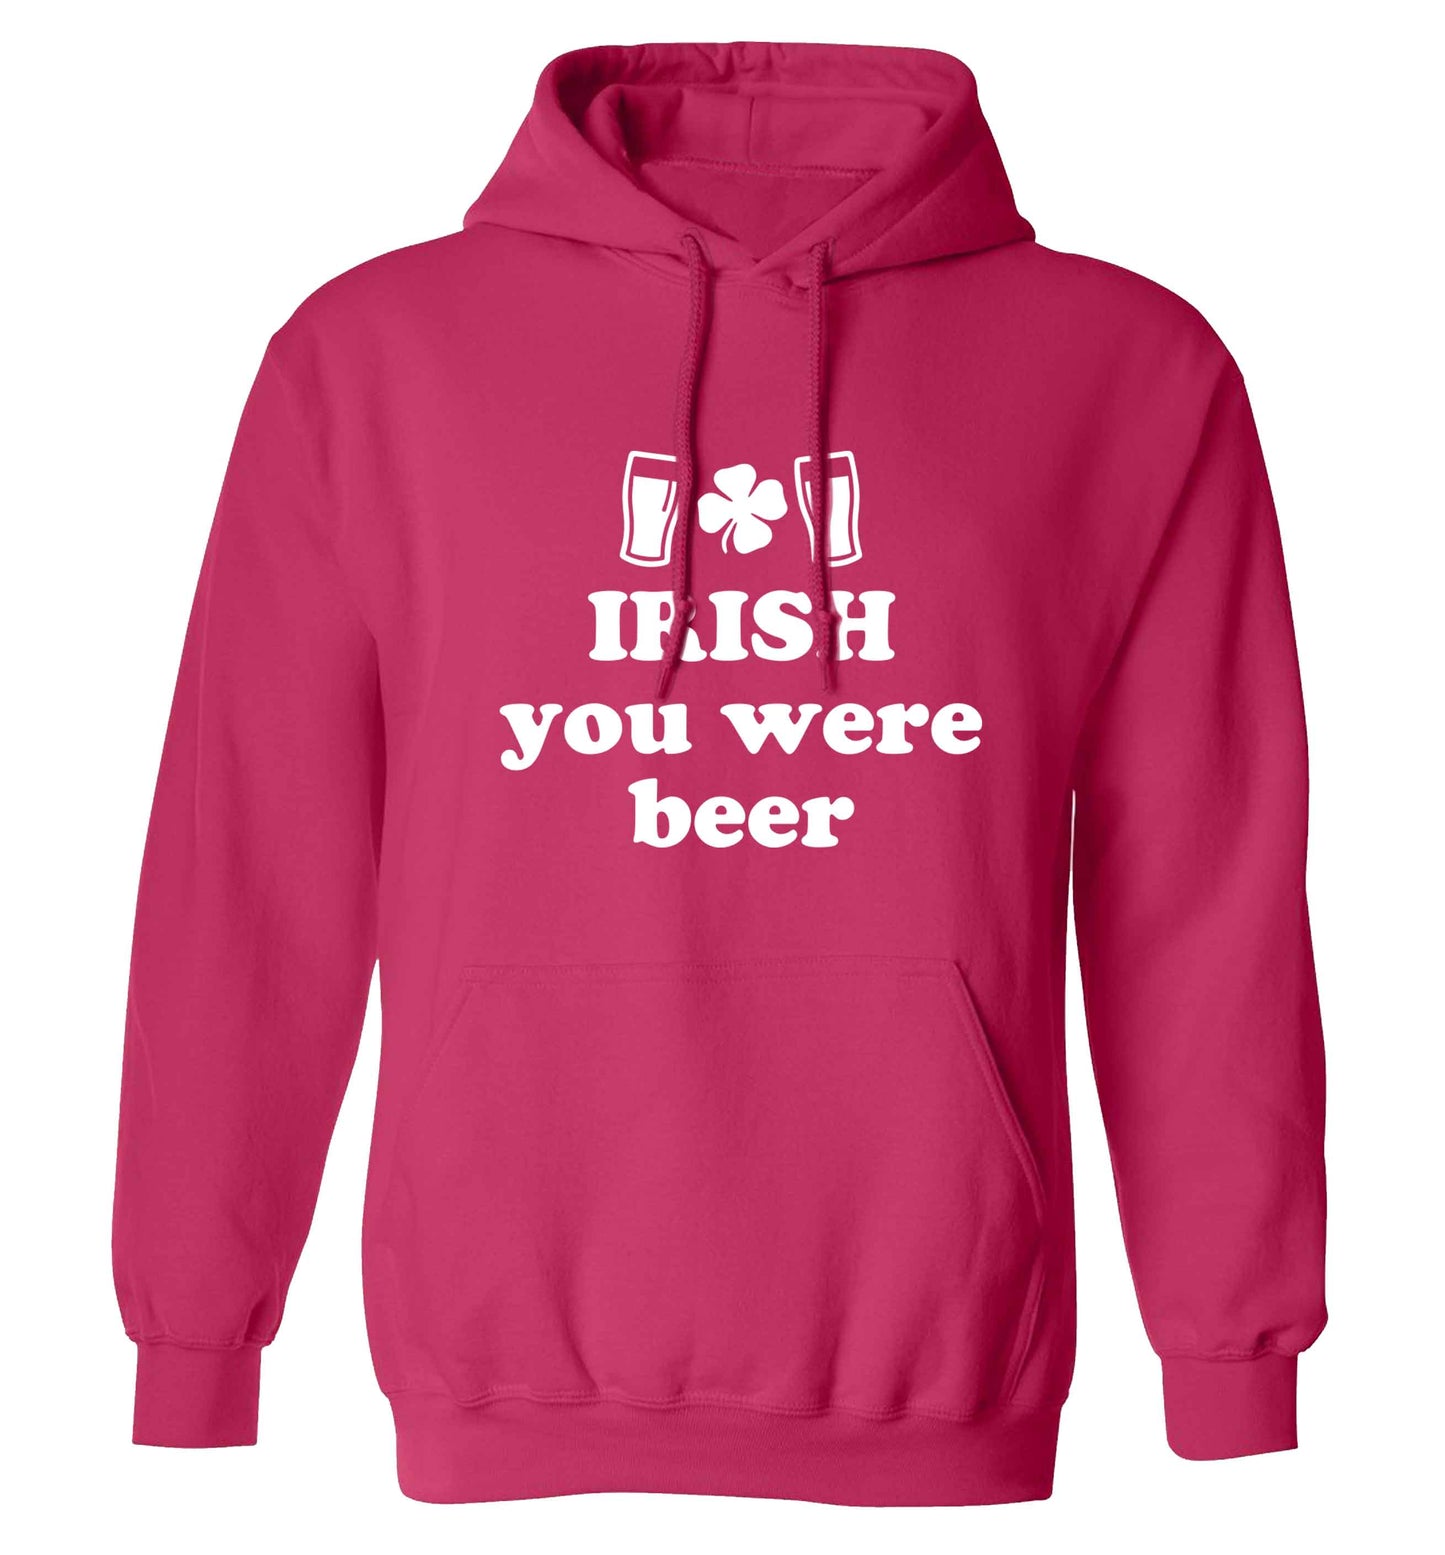 Irish you were beer adults unisex pink hoodie 2XL